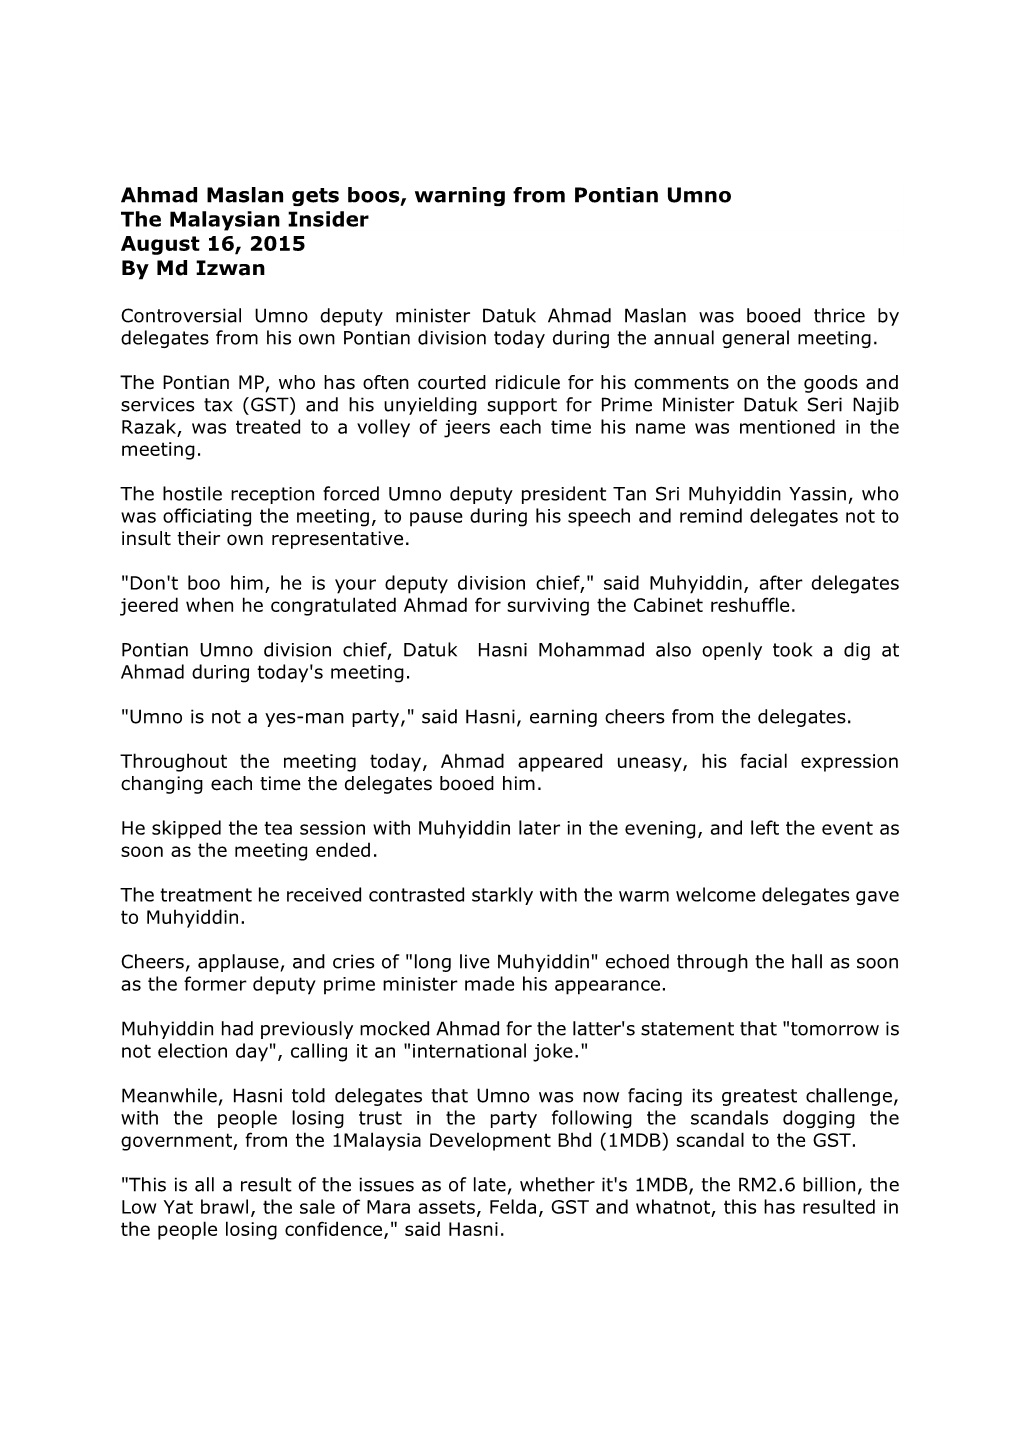 Ahmad Maslan Gets Boos, Warning from Pontian Umno the Malaysian Insider August 16, 2015 by Md Izwan